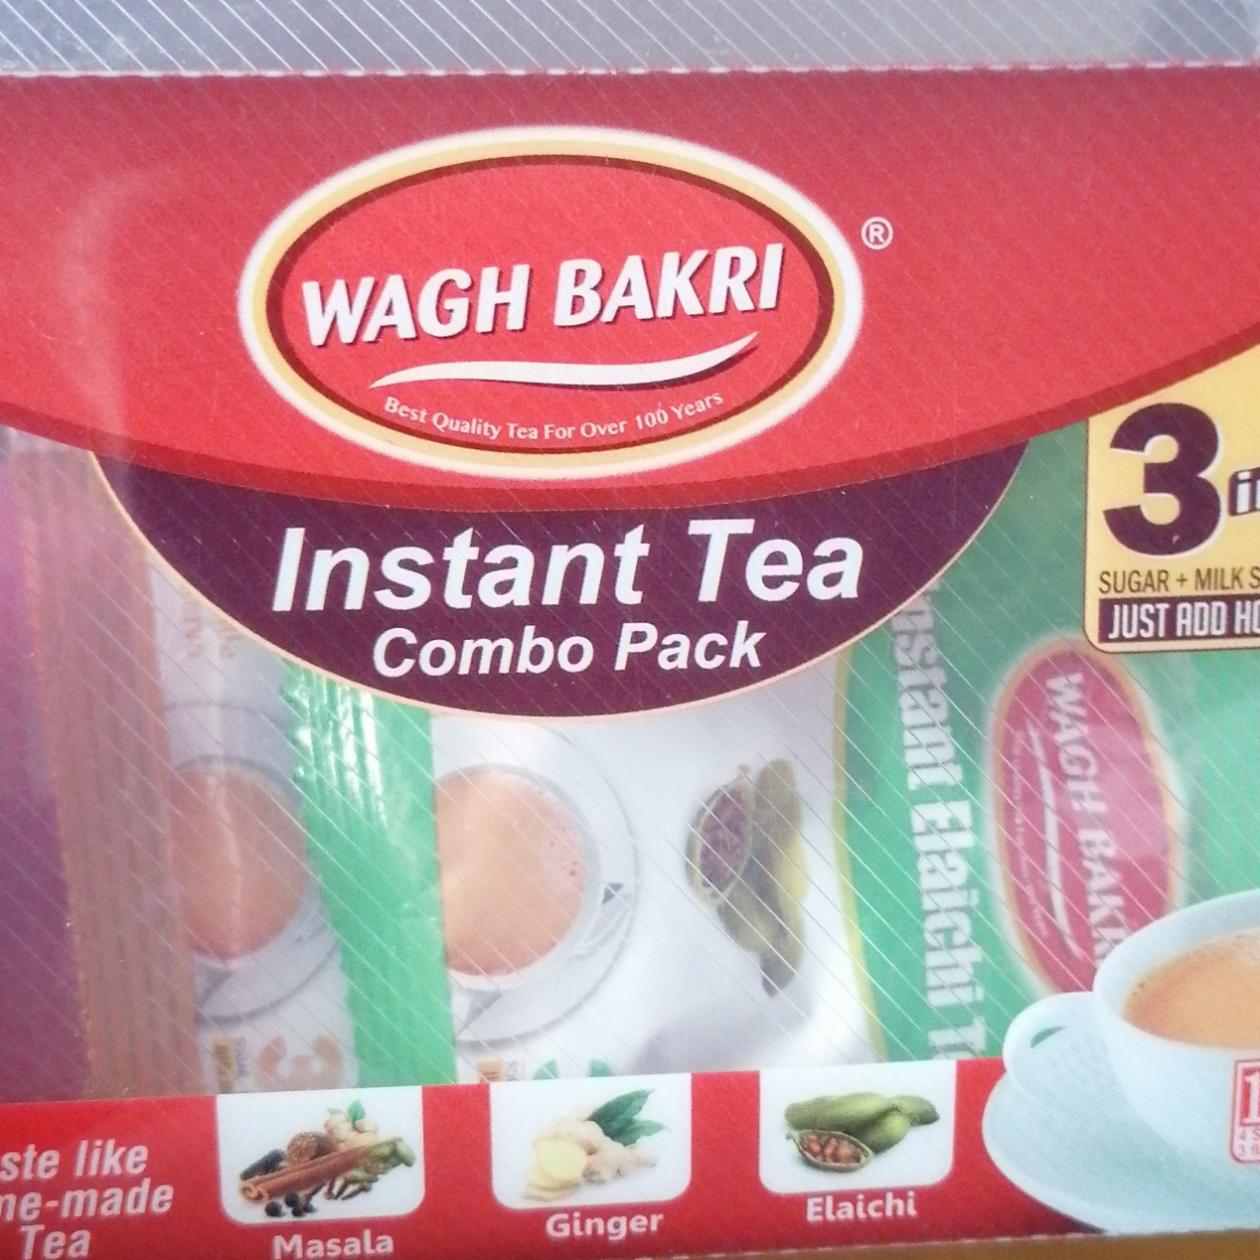 Fotografie - Inatant Tea wagh bakri